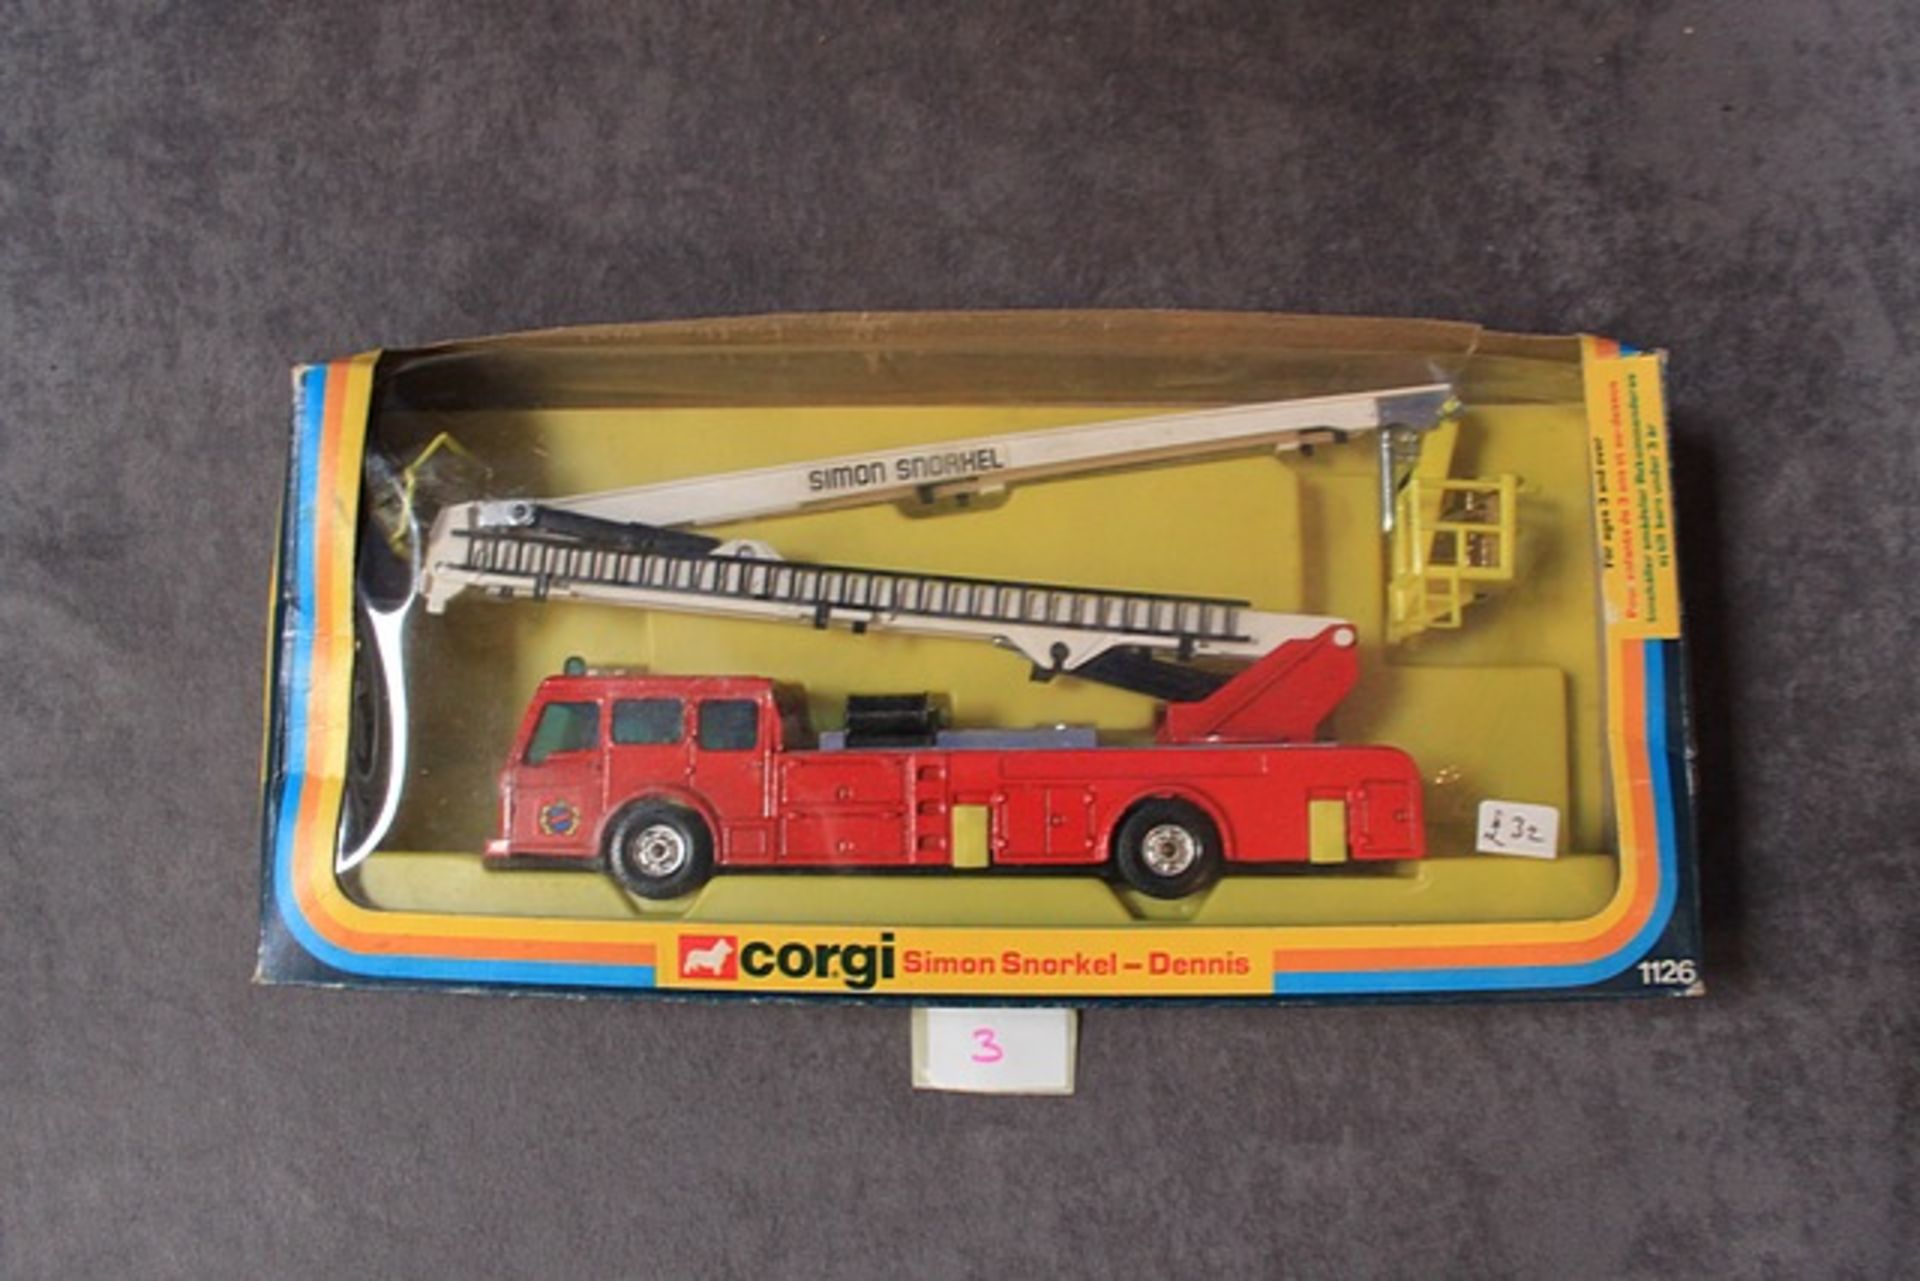 Corgi Diecast Number 1126 Simon Snorkel - Dennis Fire Truck With Box